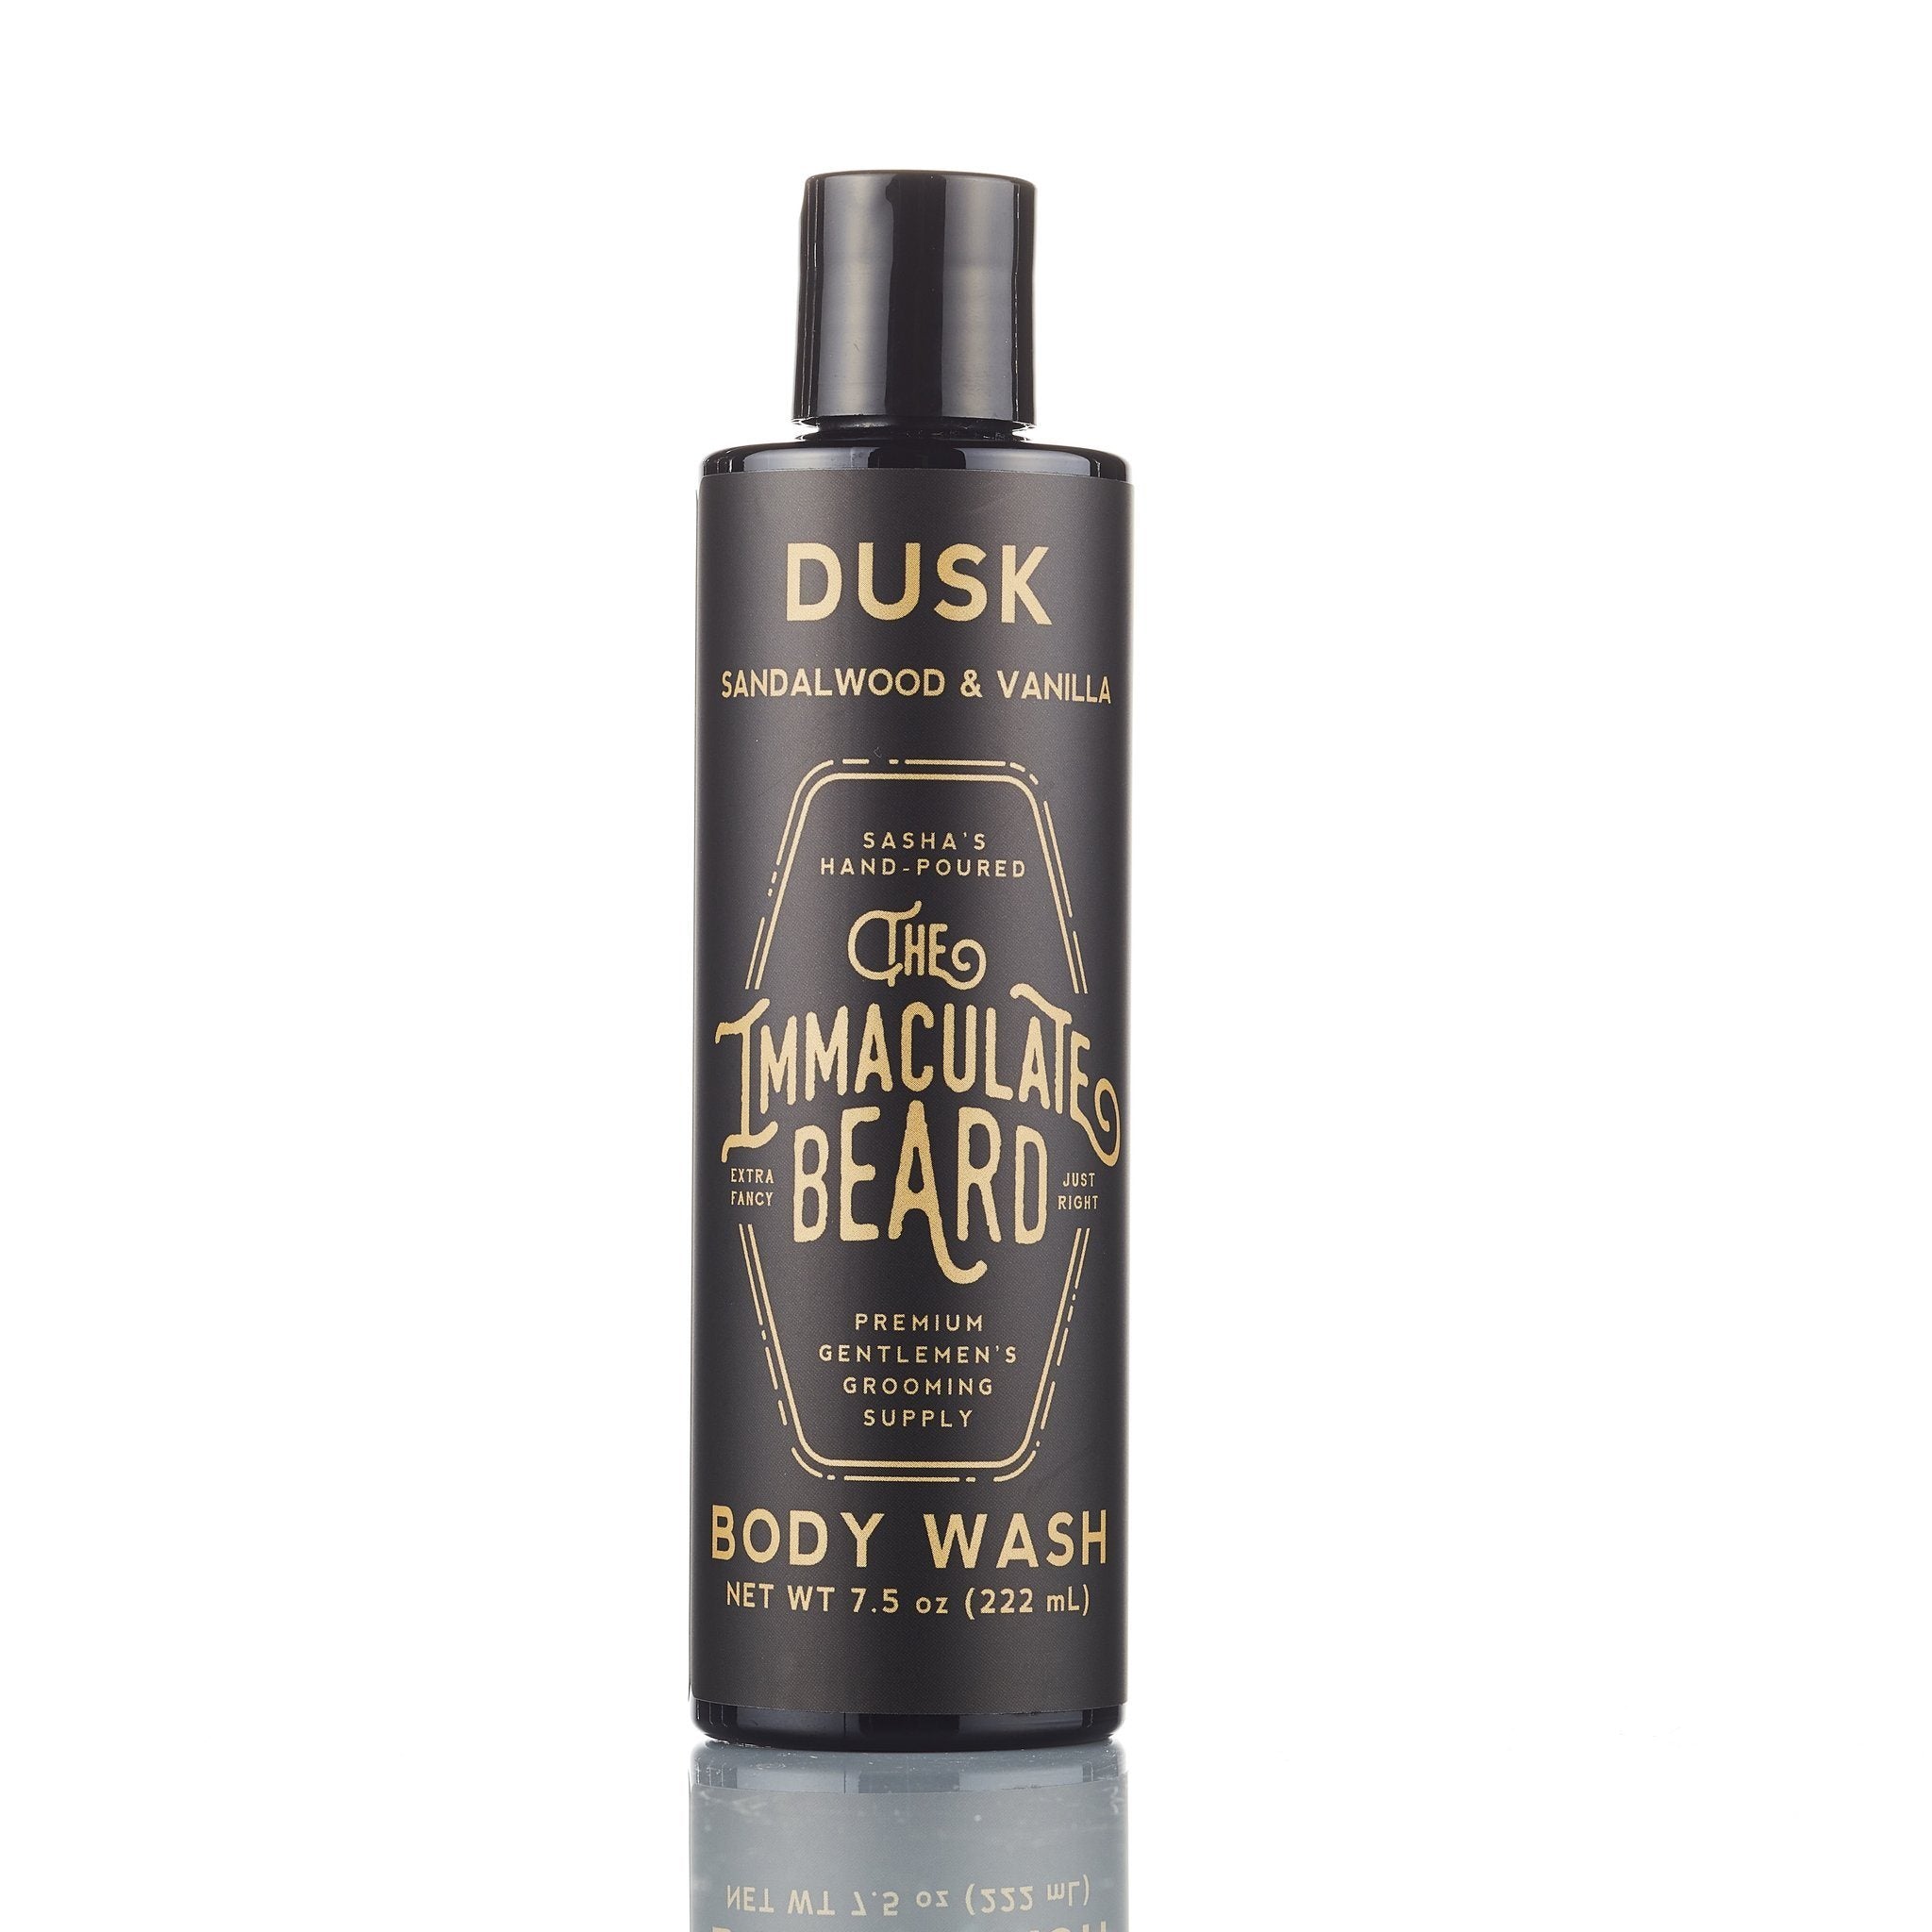 The Immaculate Beard - Dusk Body Wash